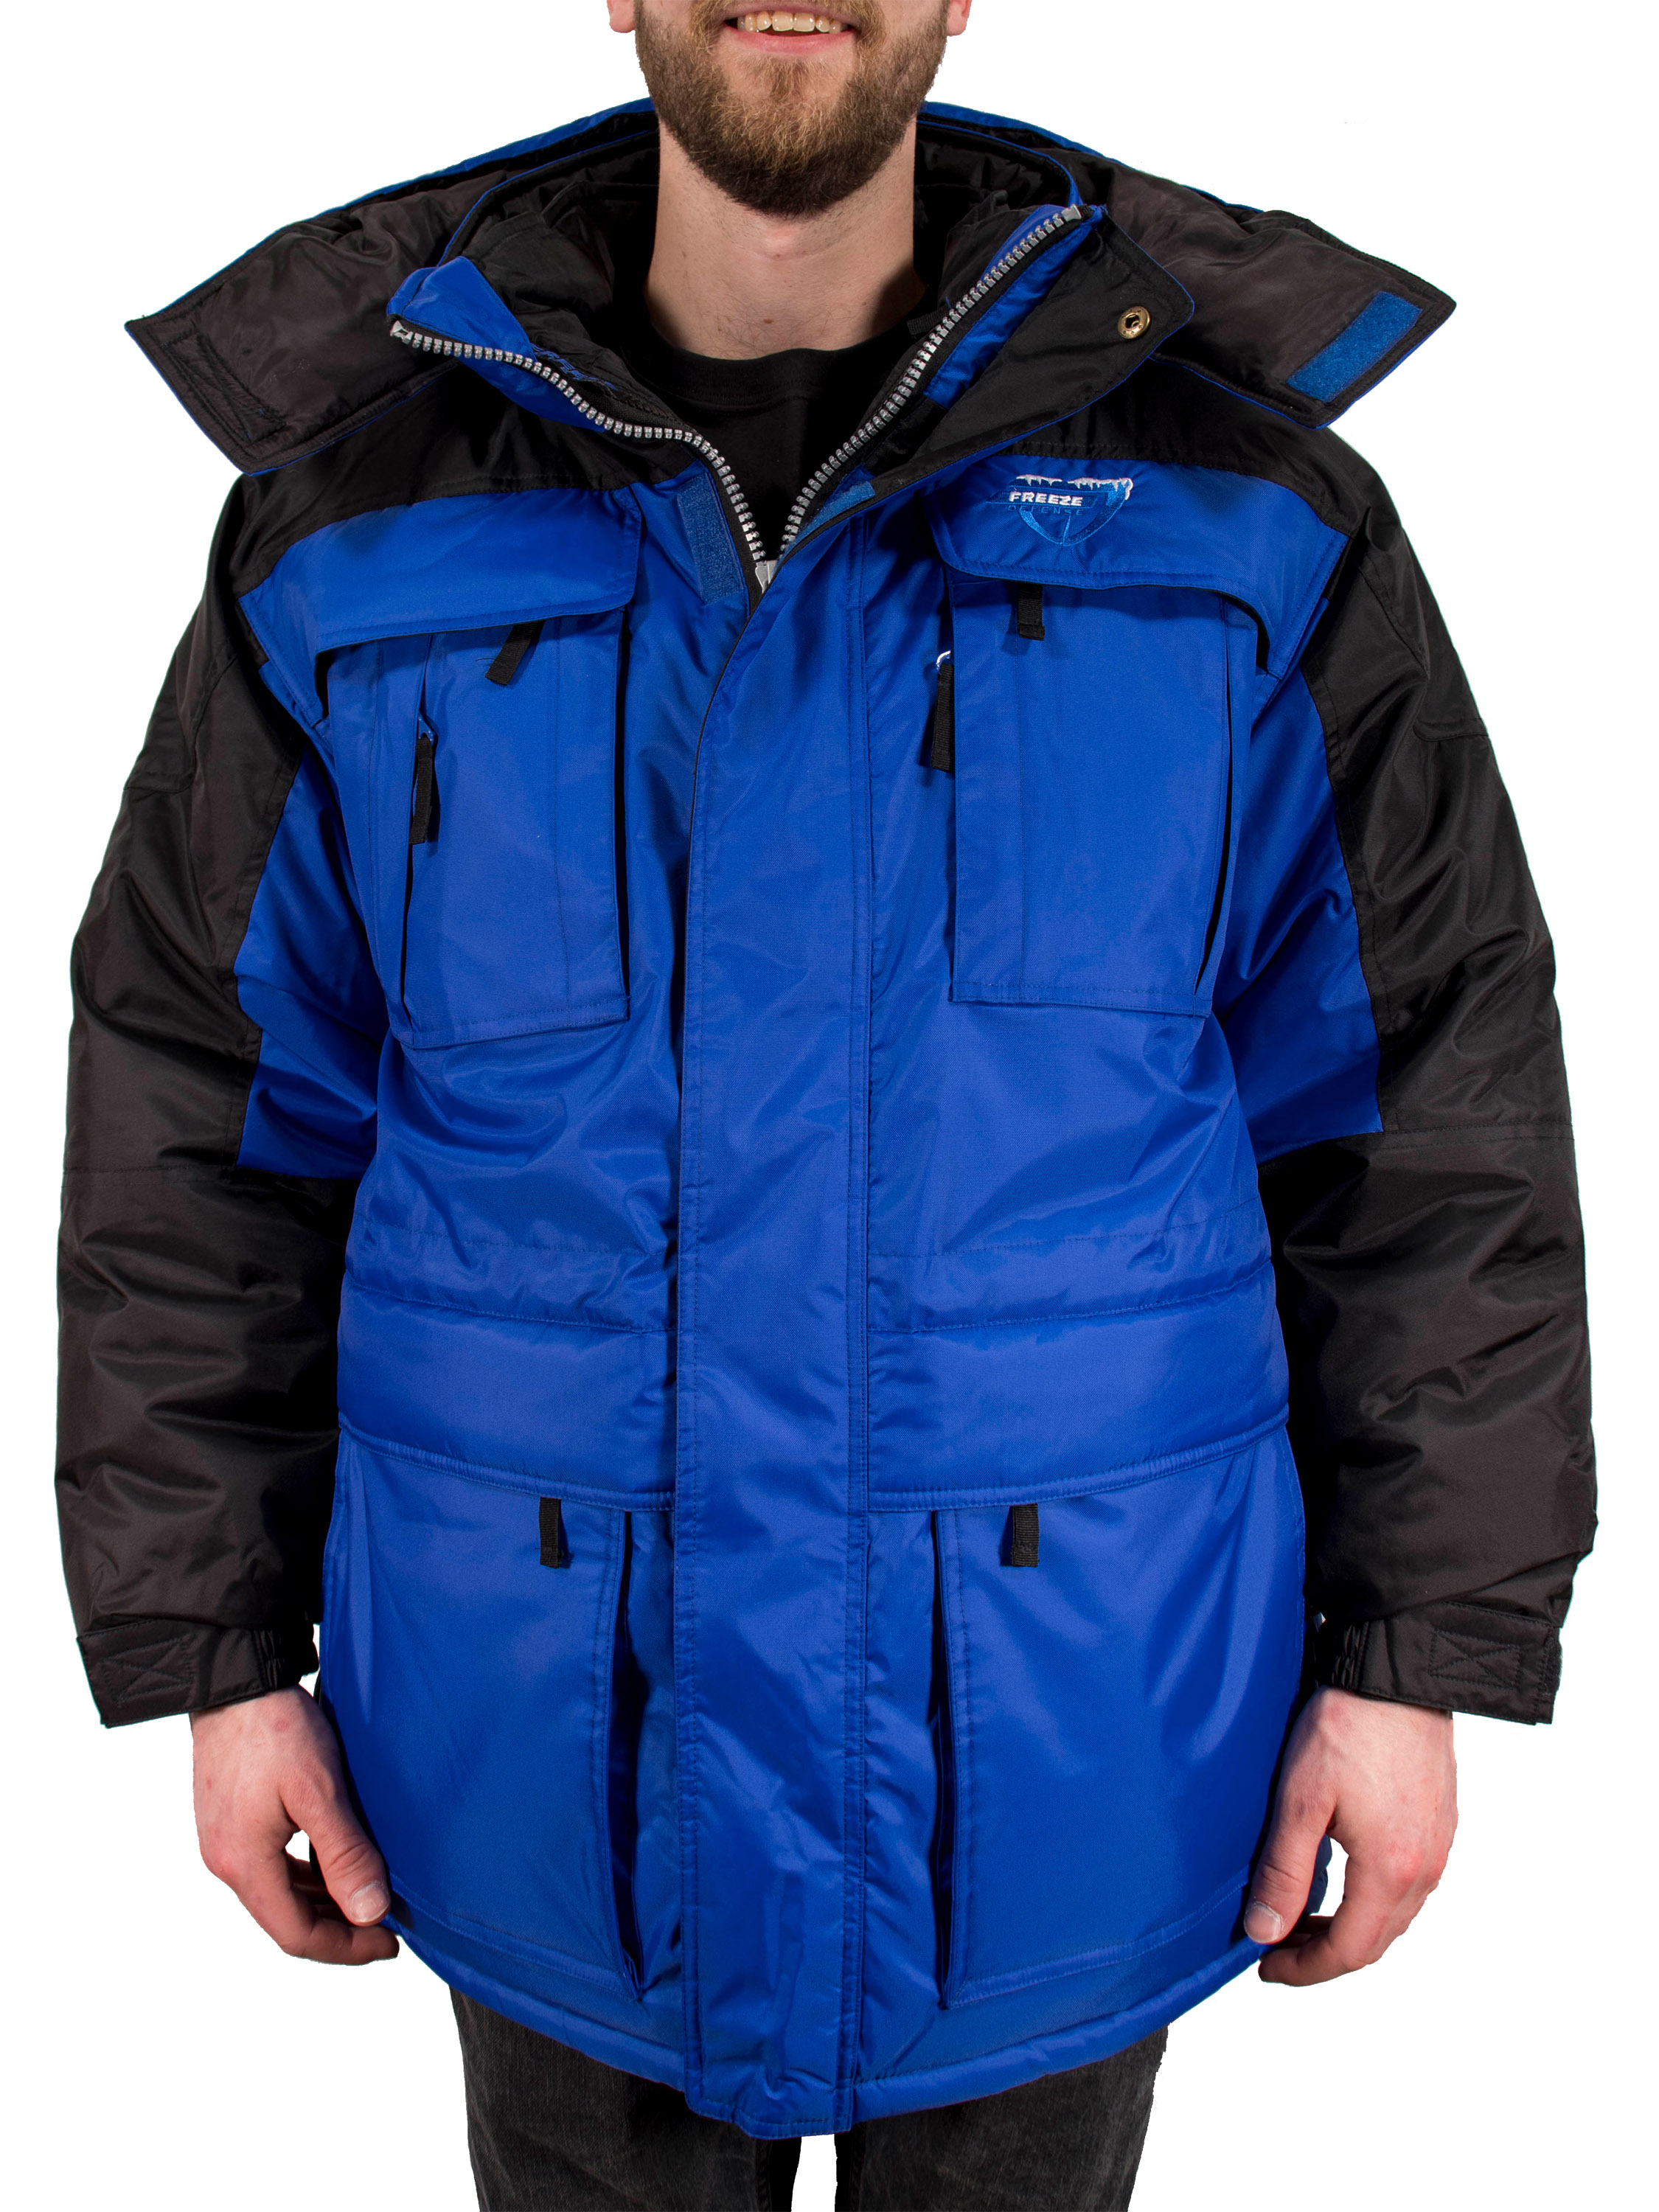 Freeze Defense Warm Men's 3in1 Winter Jacket Coat Parka & Vest (Small, Blue) - image 1 of 10